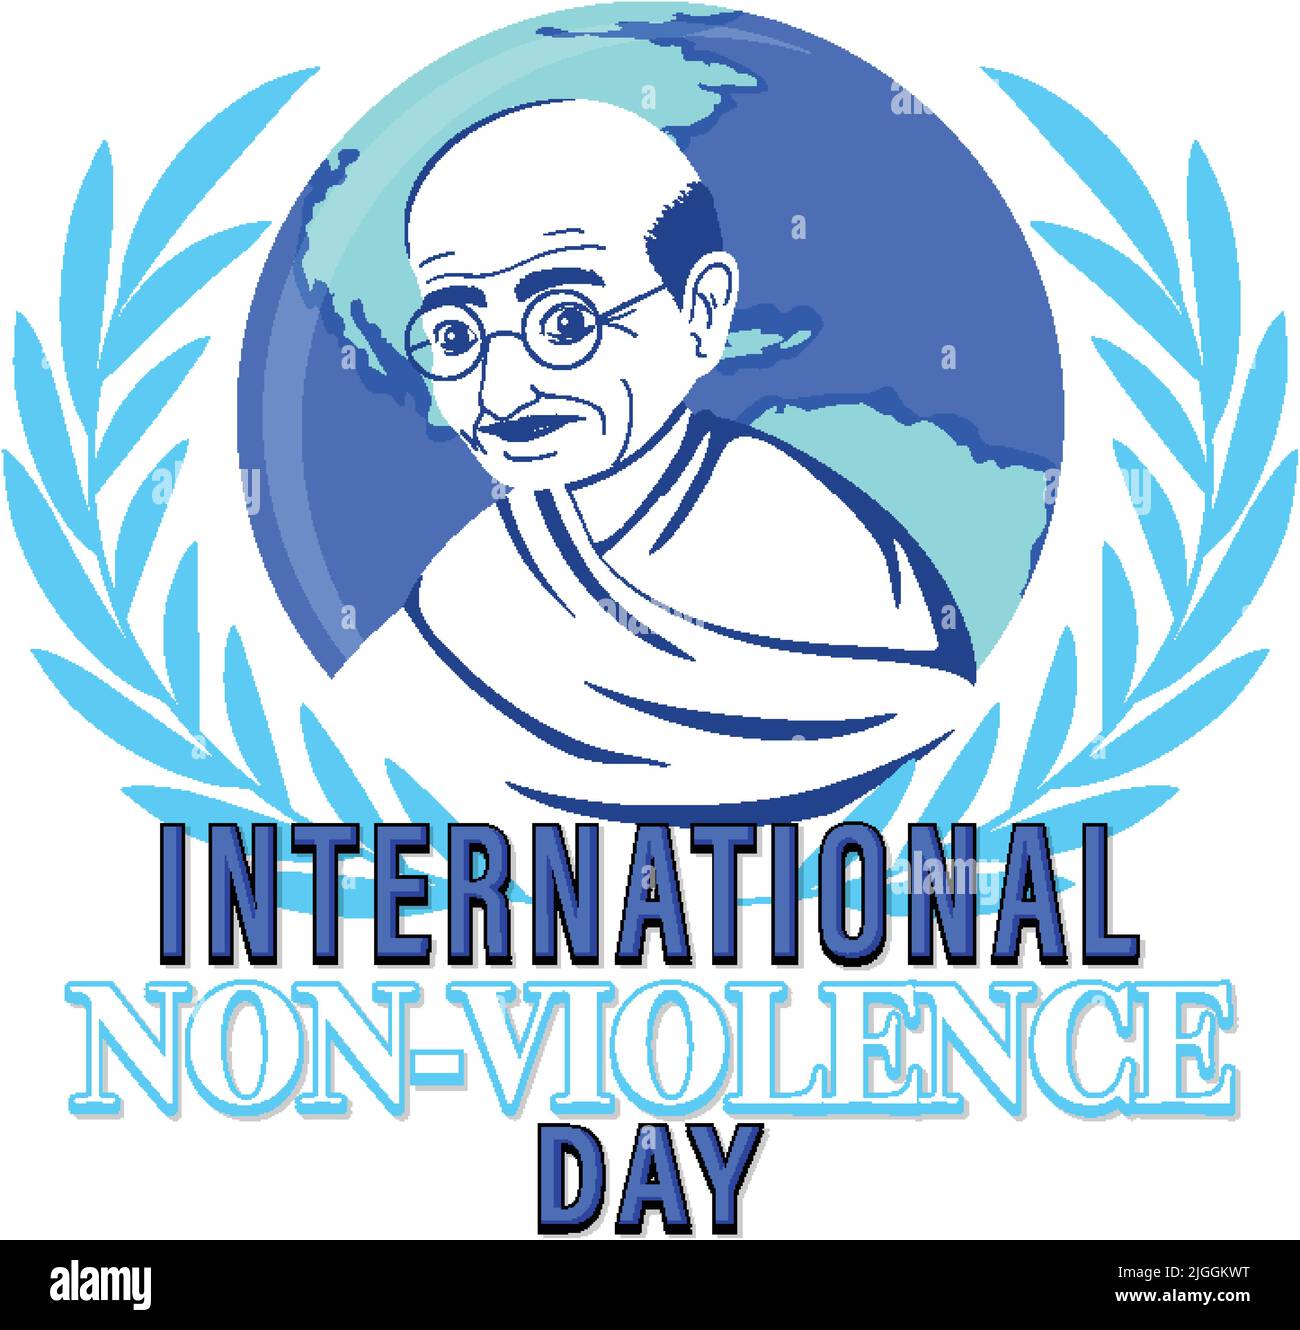 Internationaler Tag der Gewaltlosigkeit Poster Design Illustration Stock Vektor